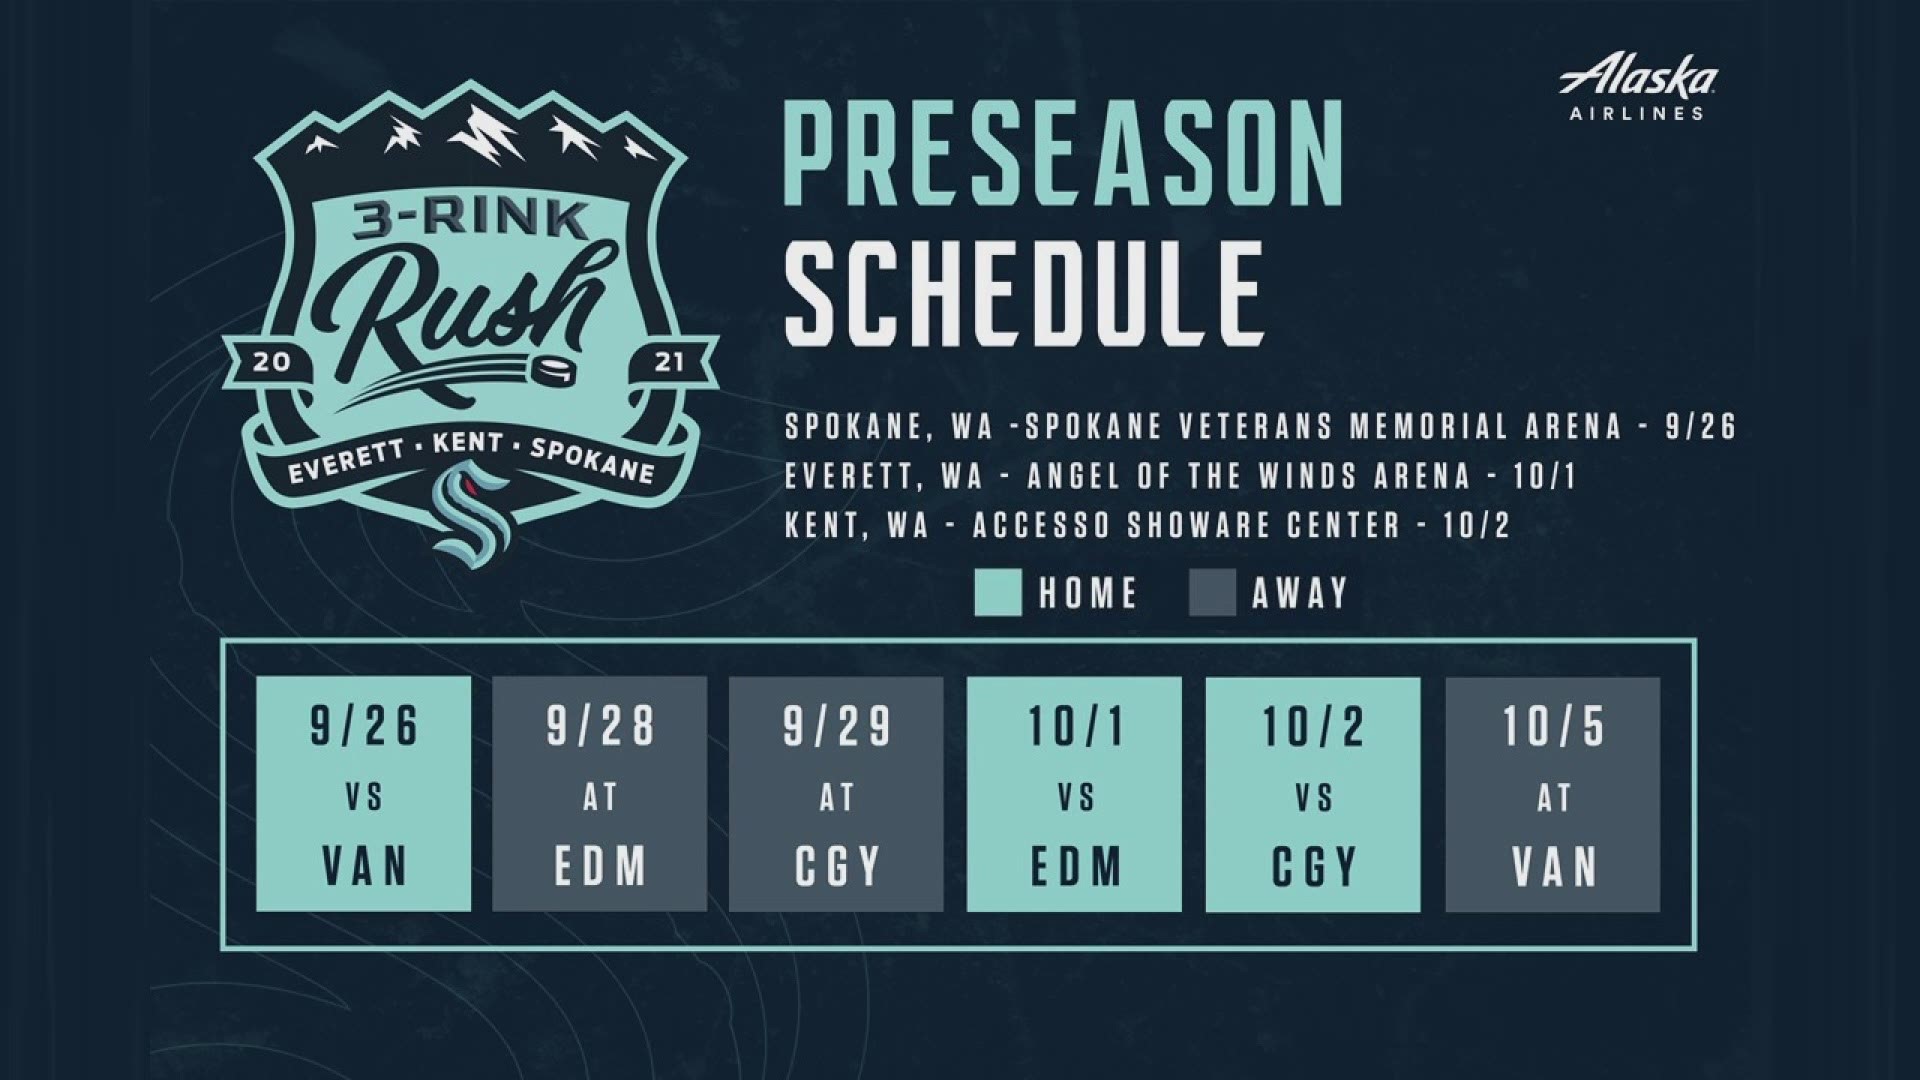 The Seattle Kraken will play three “home” preseason games in Spokane, Everett and Kent.